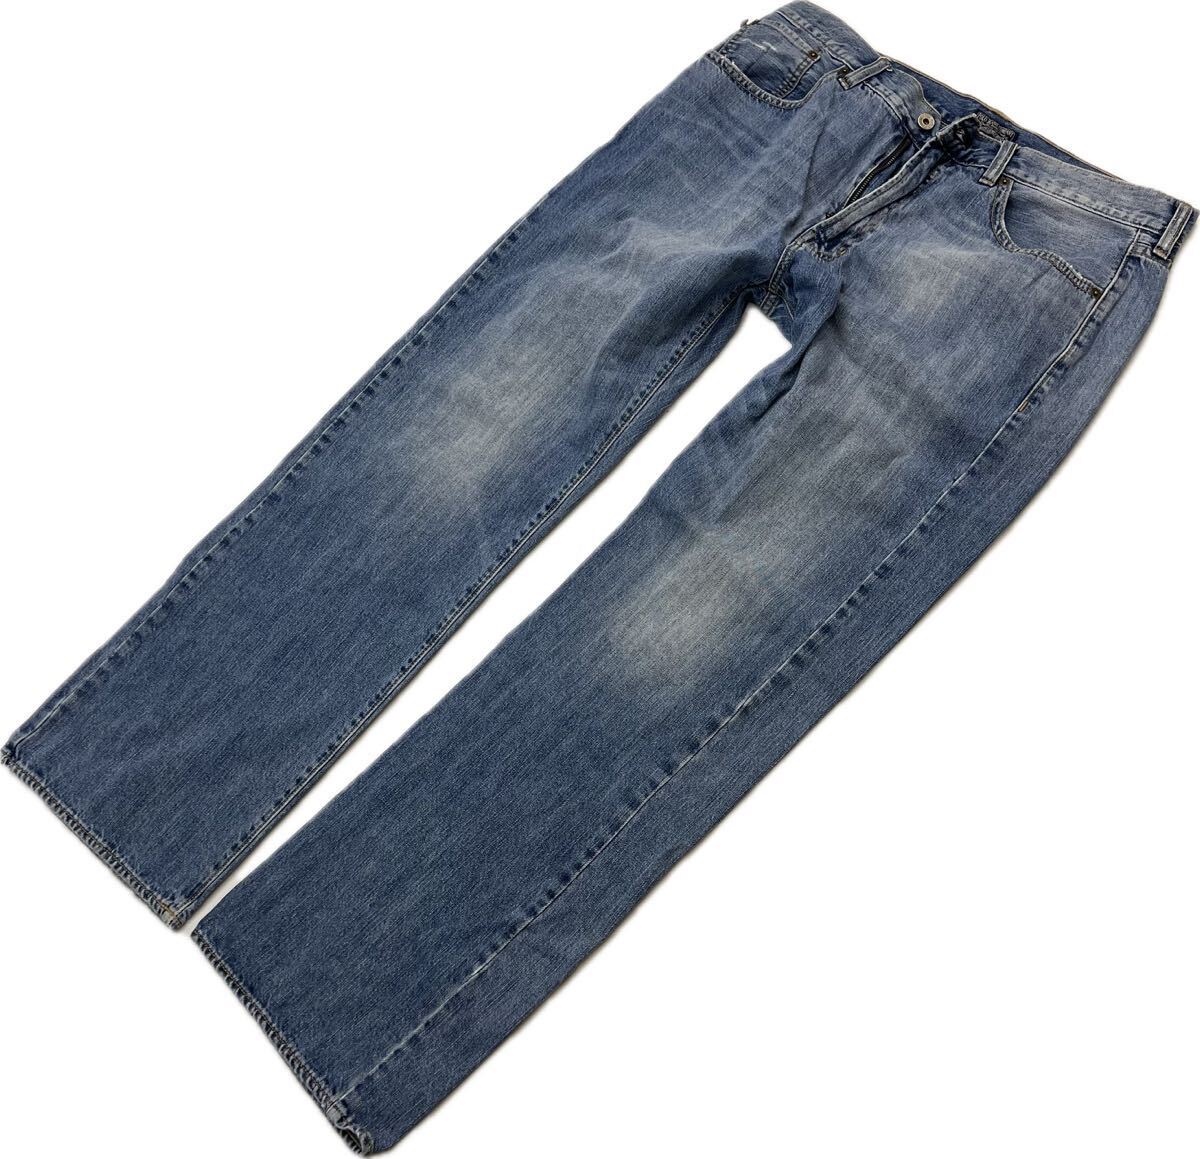 POLO JEANS RALPH LAUREN * безупречный . текстура (ткани) * Denim брюки джинсы голубой W36 American Casual б/у одежда Ralph Lauren Polo джинсы #JS1108